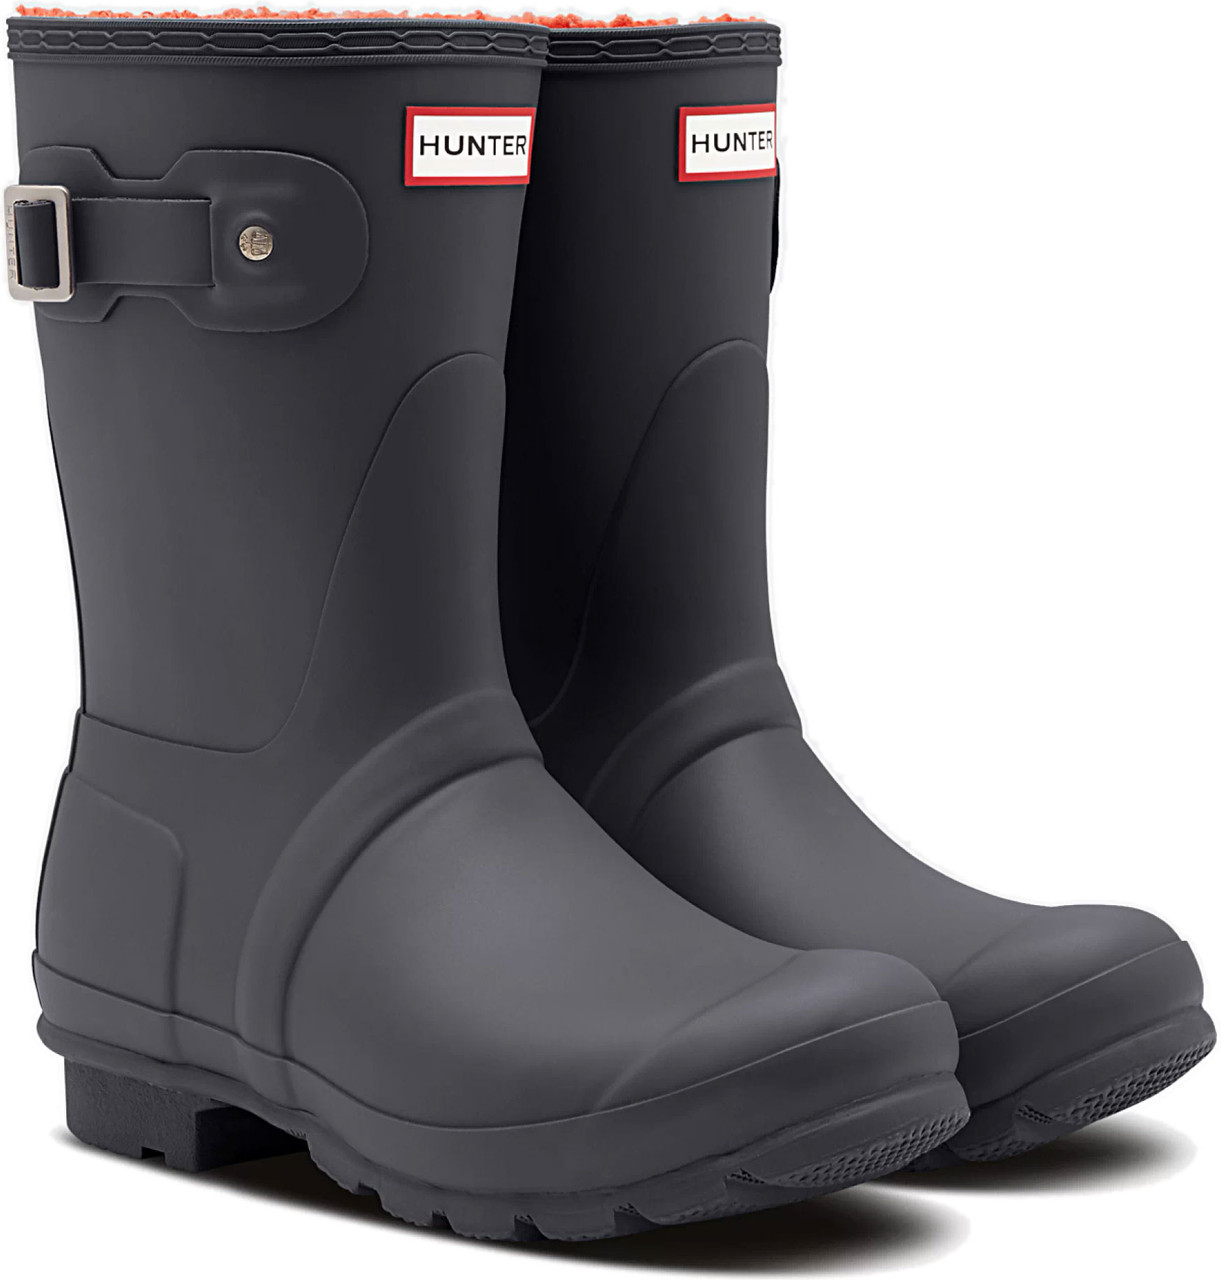 womens insulated rain boots